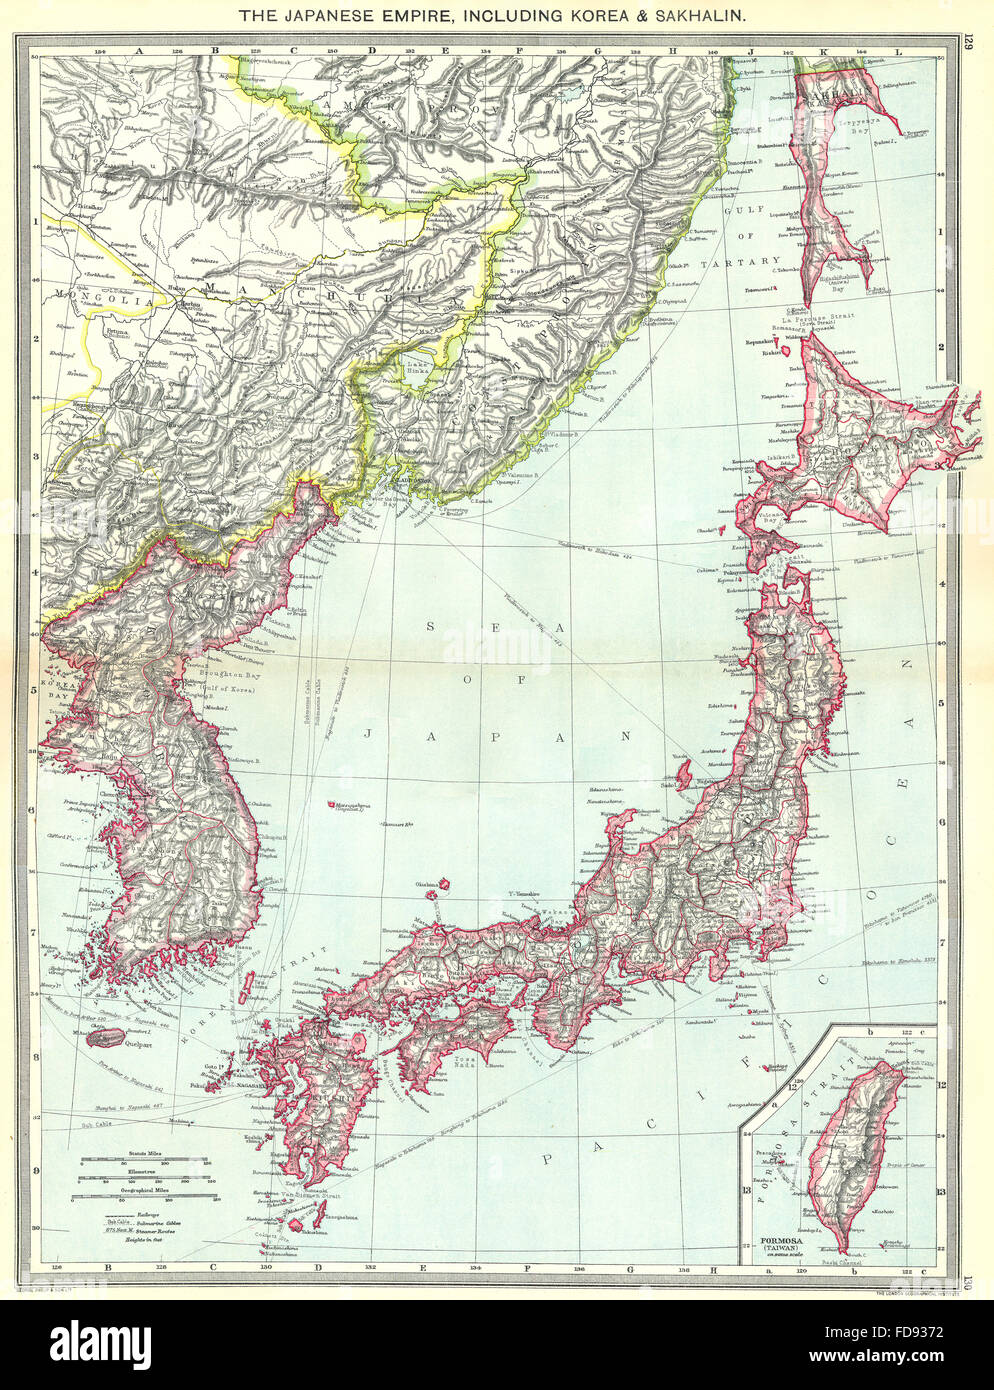 Japan Japanese Empire Including Korea Sakhalin Map Of Formosa Taiwan 1907 Stock Photo Alamy